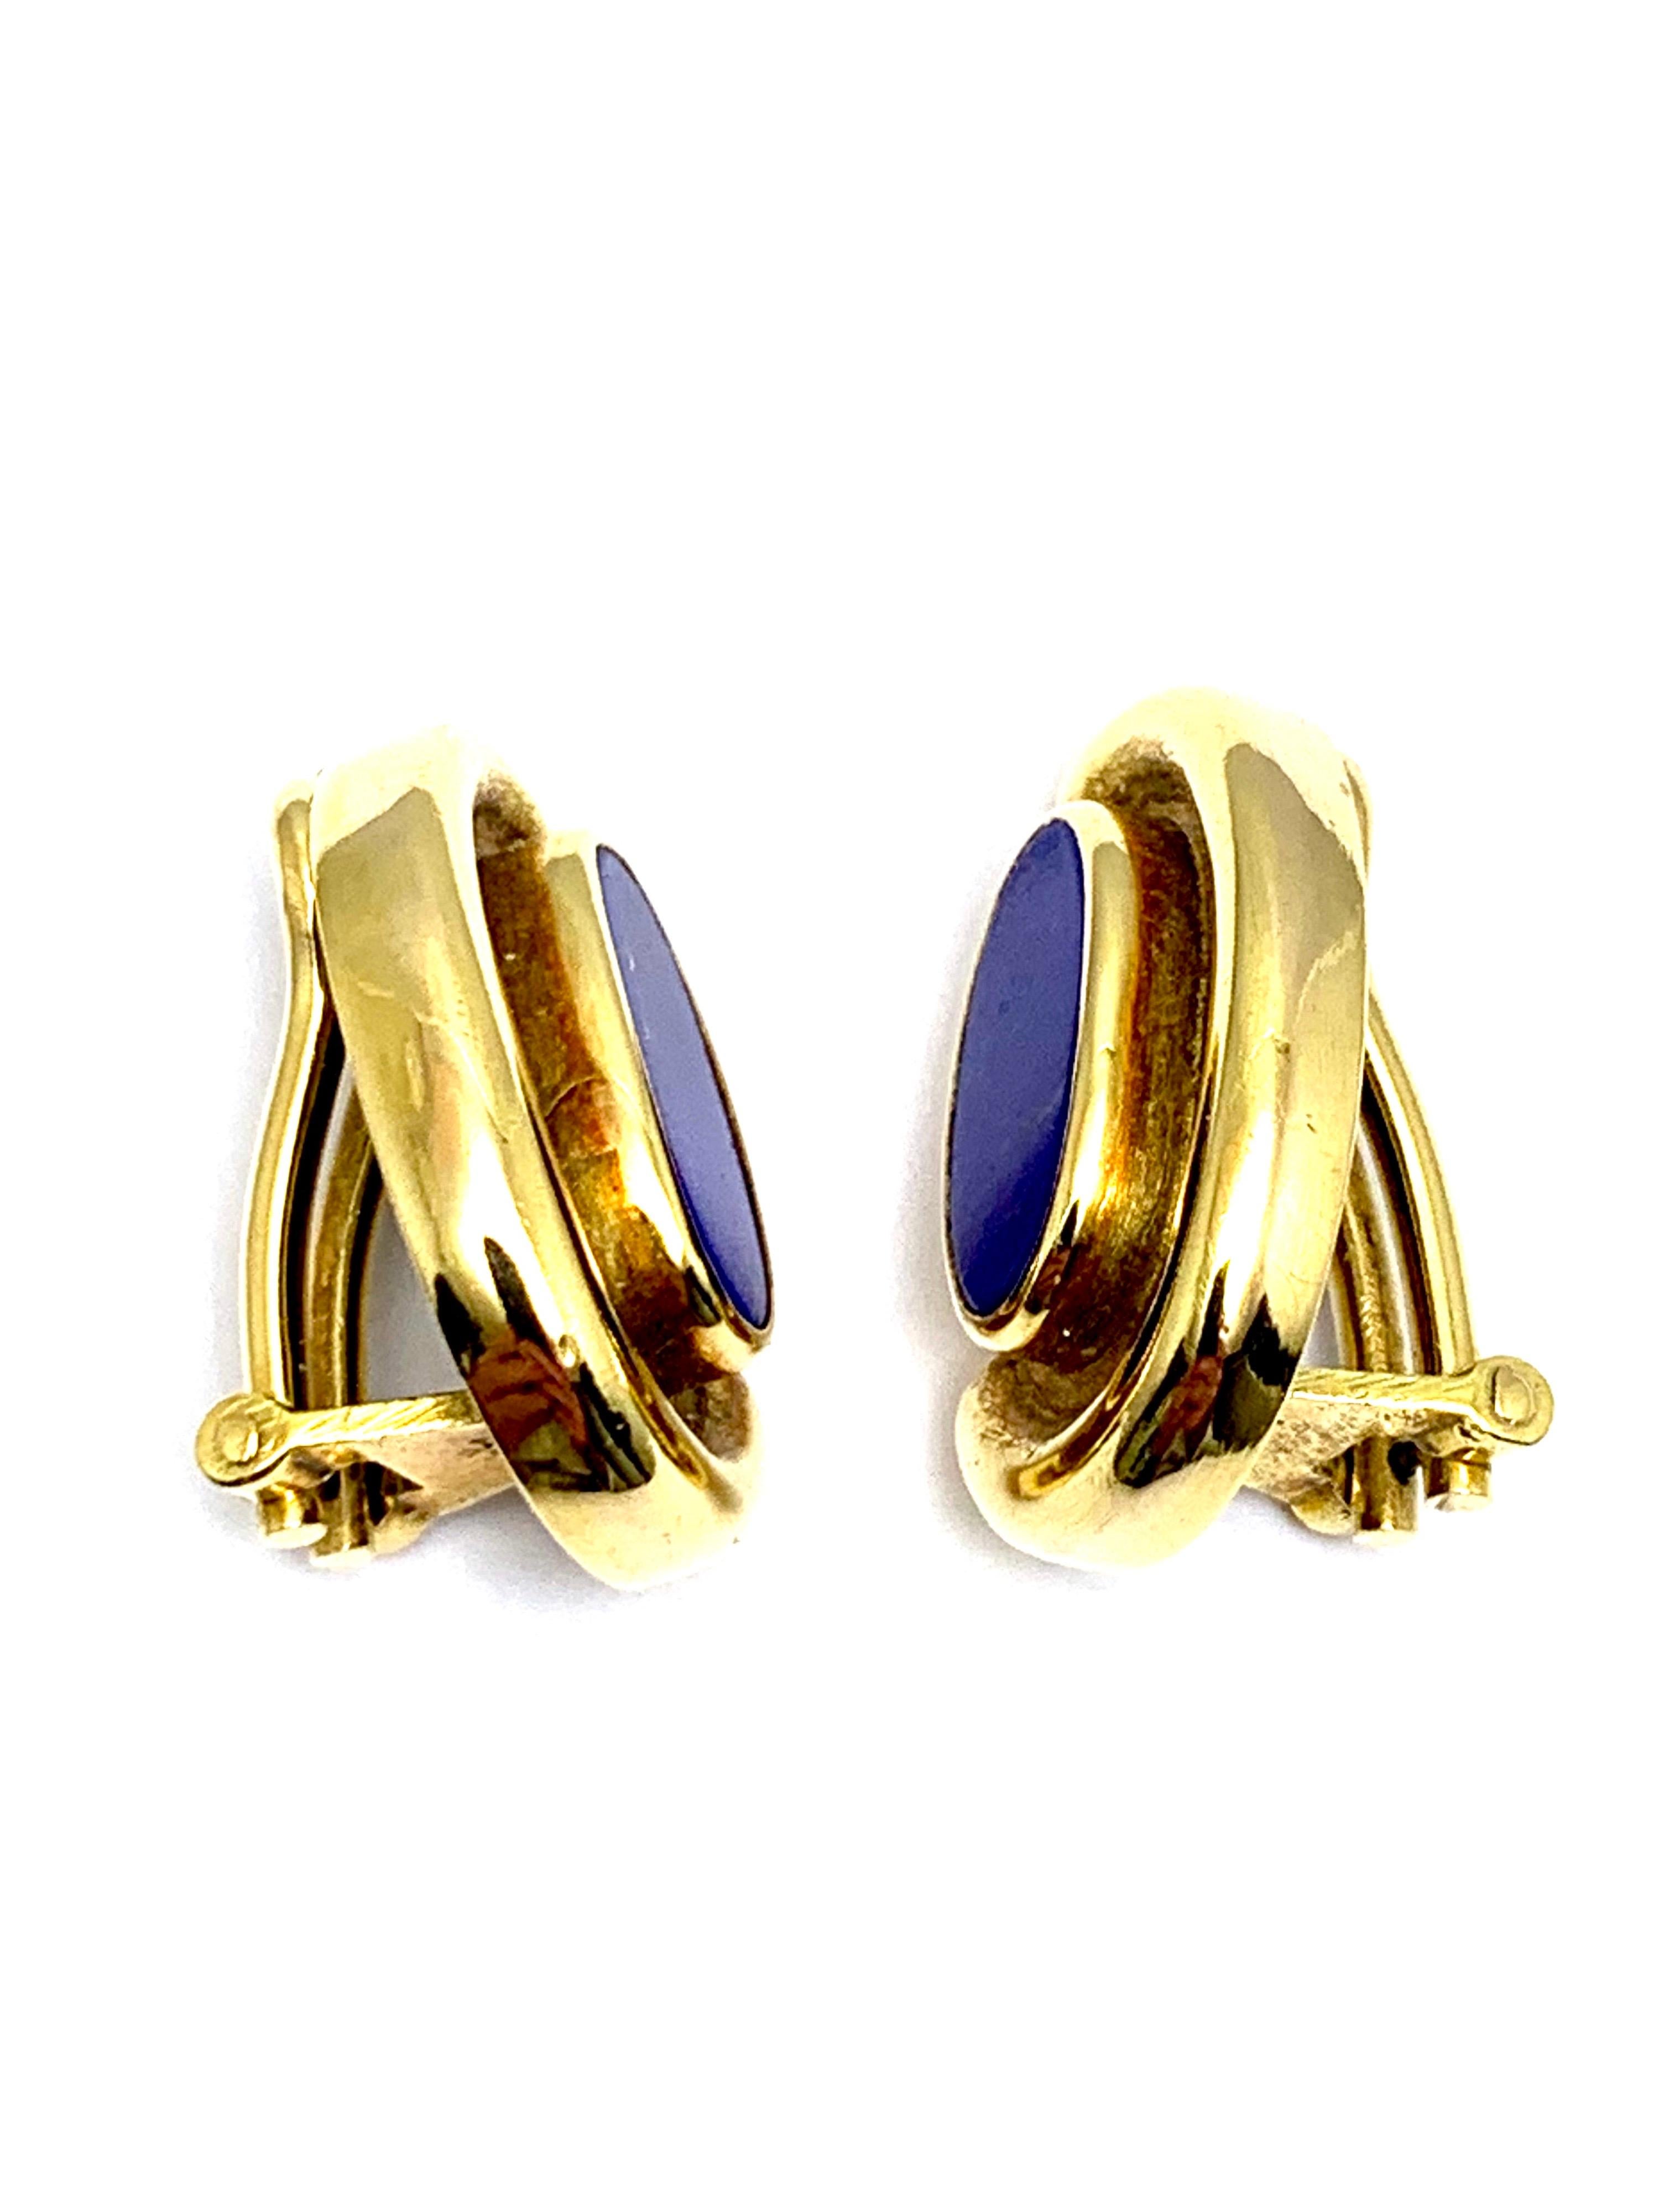 Oval Cut Burle Marx Bezel Set Lapis Lazuli 18 Karat Yellow Gold Clip Earrings